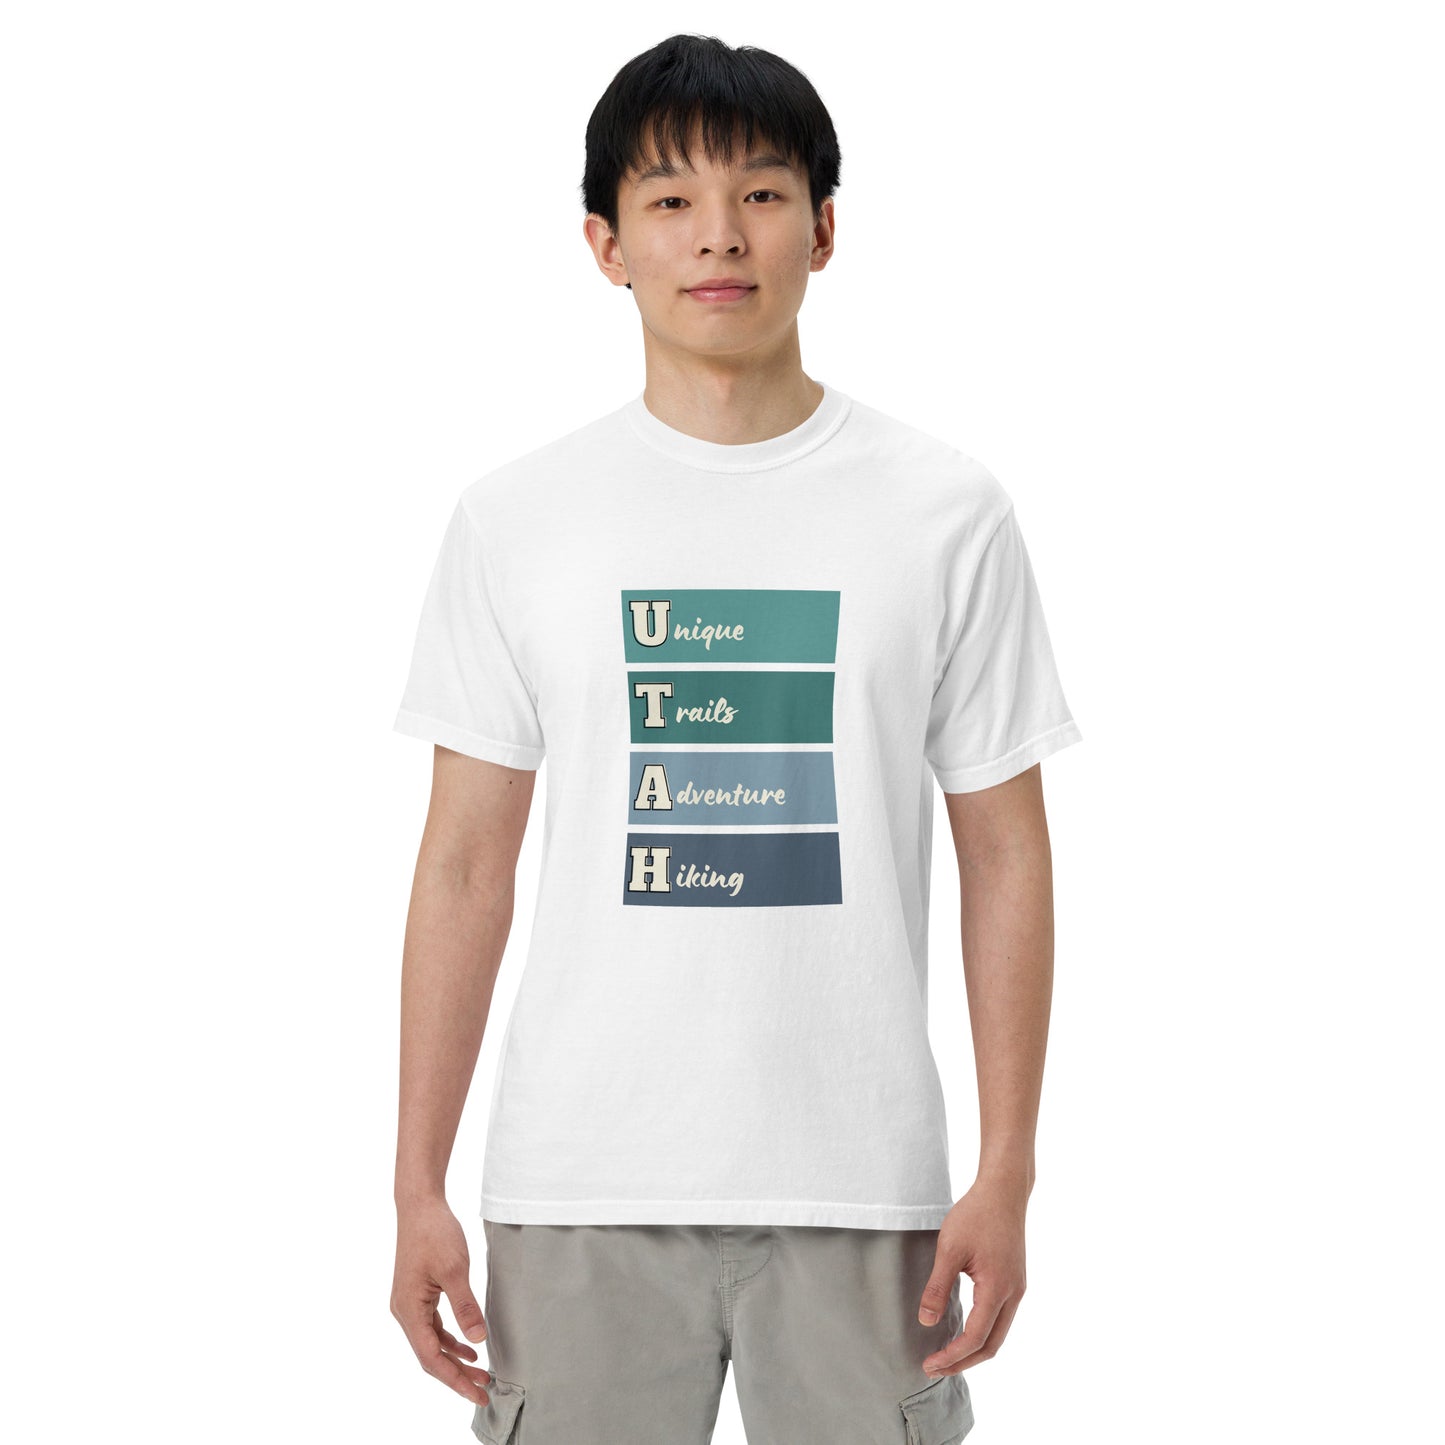 Utah Lifestyle Traits T-Shirt